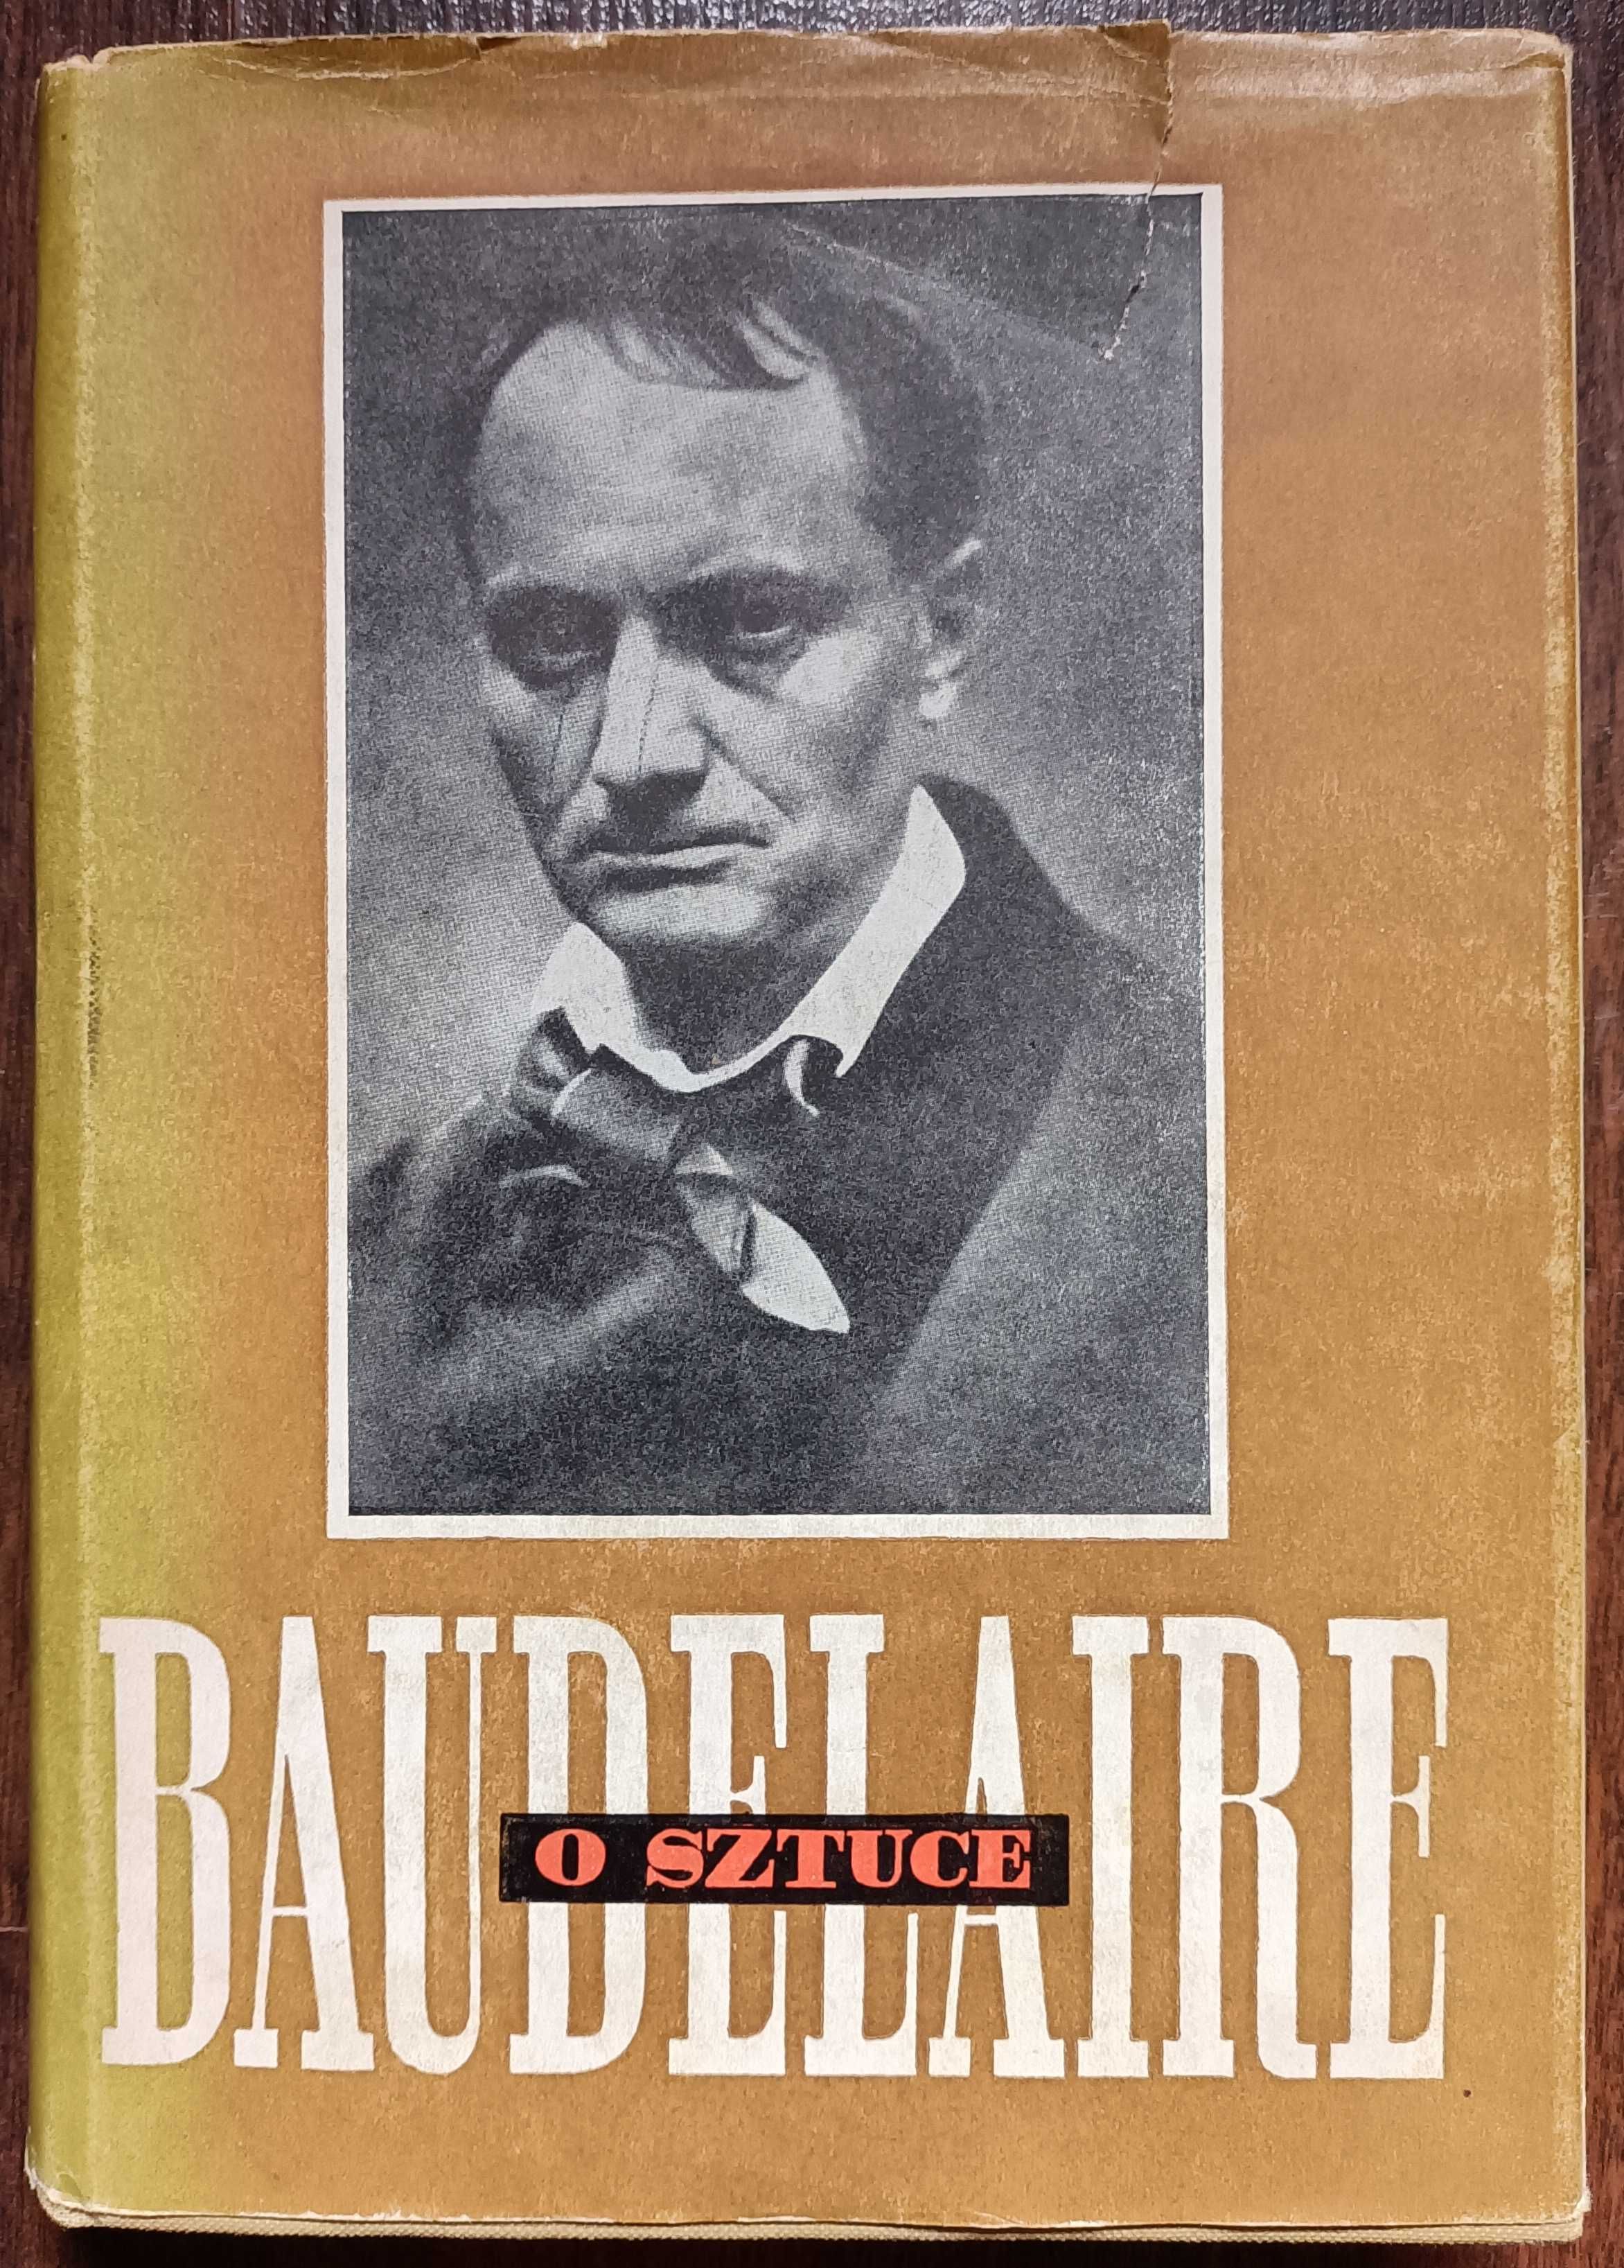 Baudelaire O sztuce wydanie l, 1961r